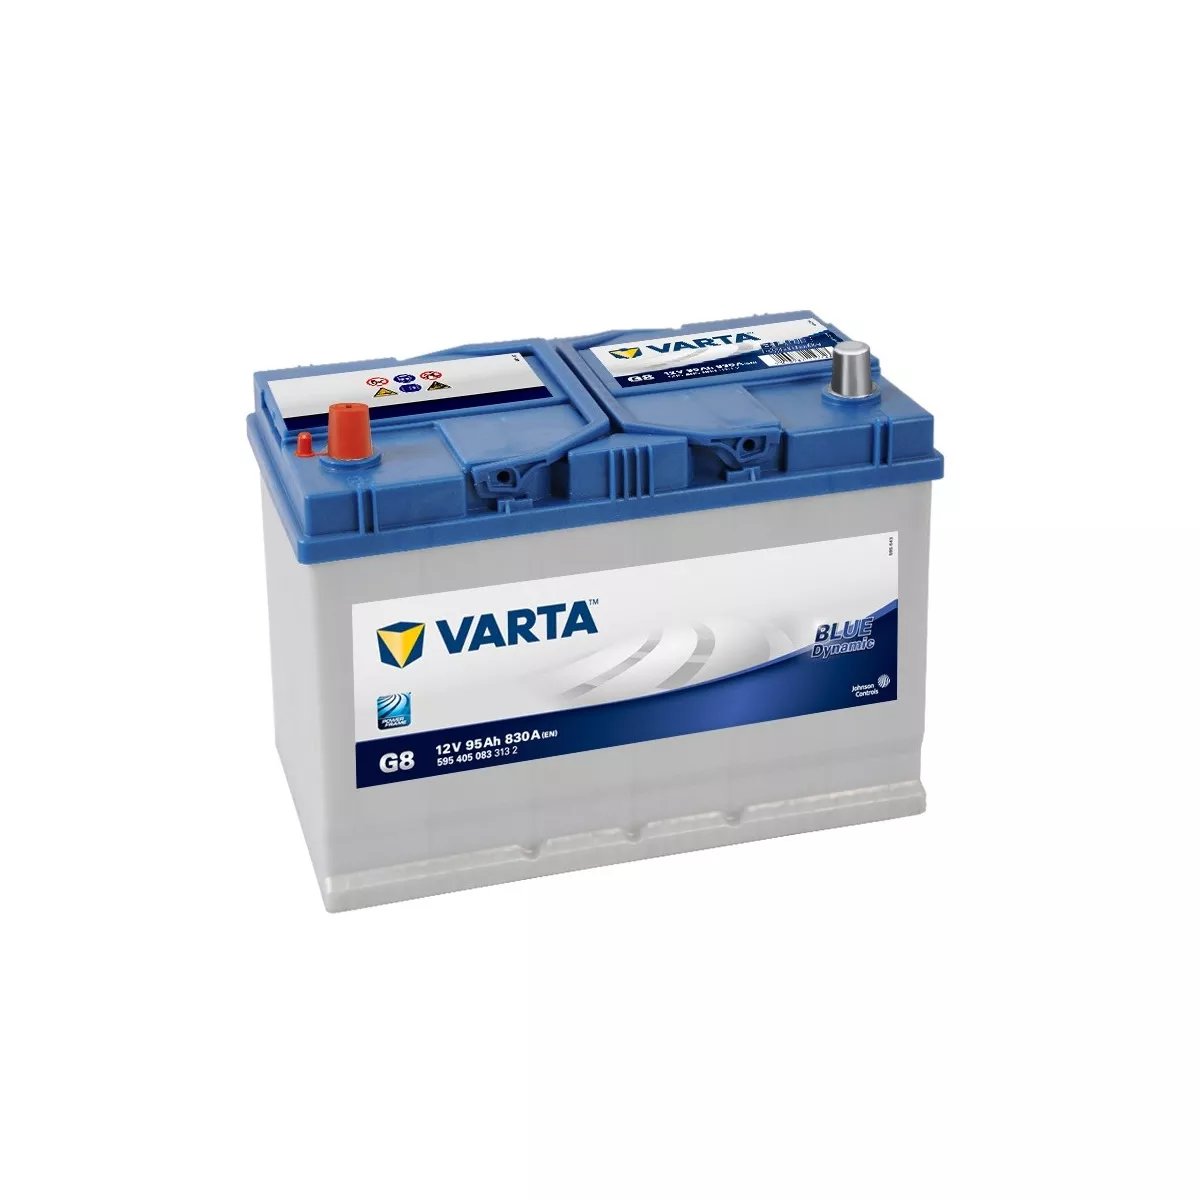 5954050833132 VARTA G8 BLUE dynamic G8 Batterie 12V 95Ah 830A B01  Bleiakkumulator